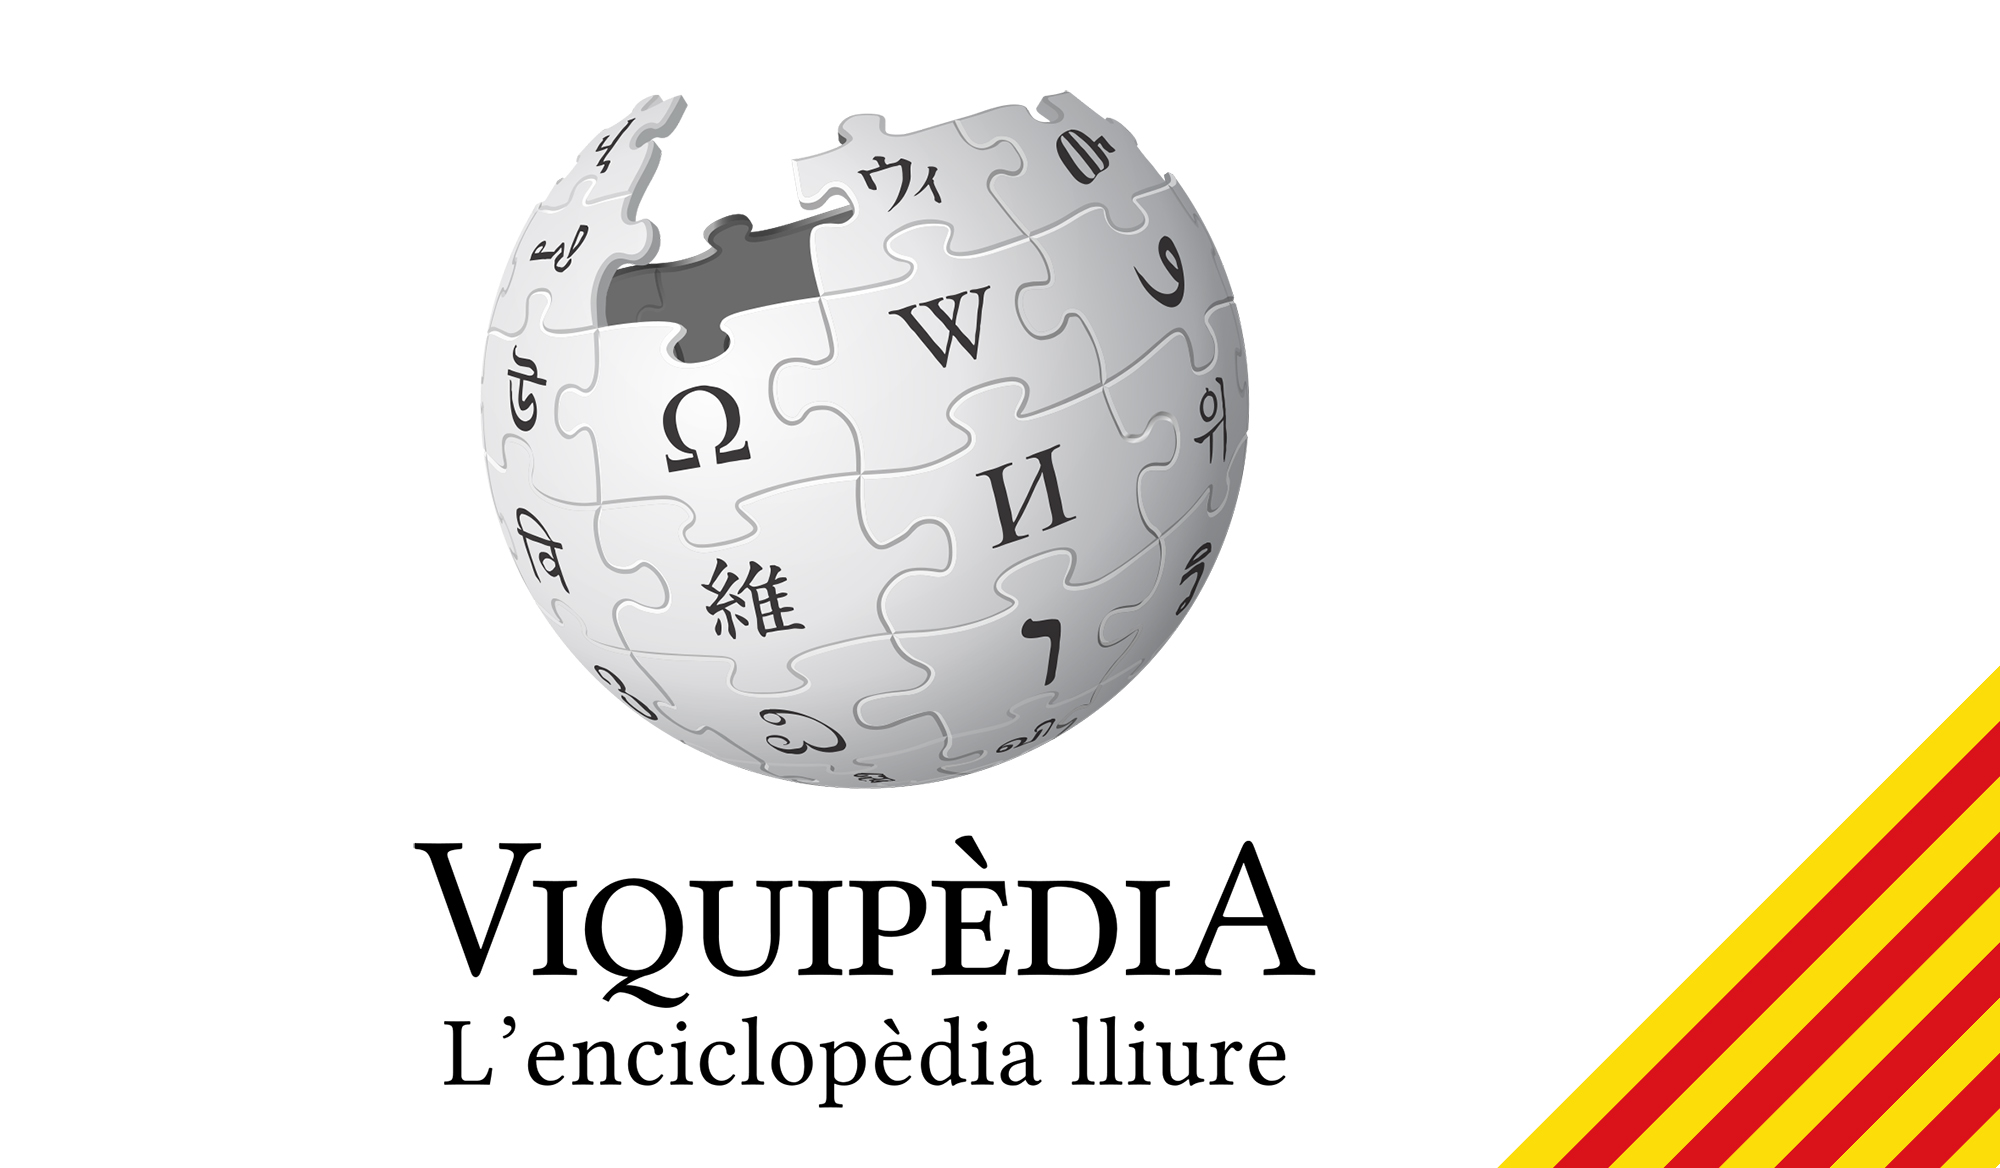 20 anos de Viquipèdia